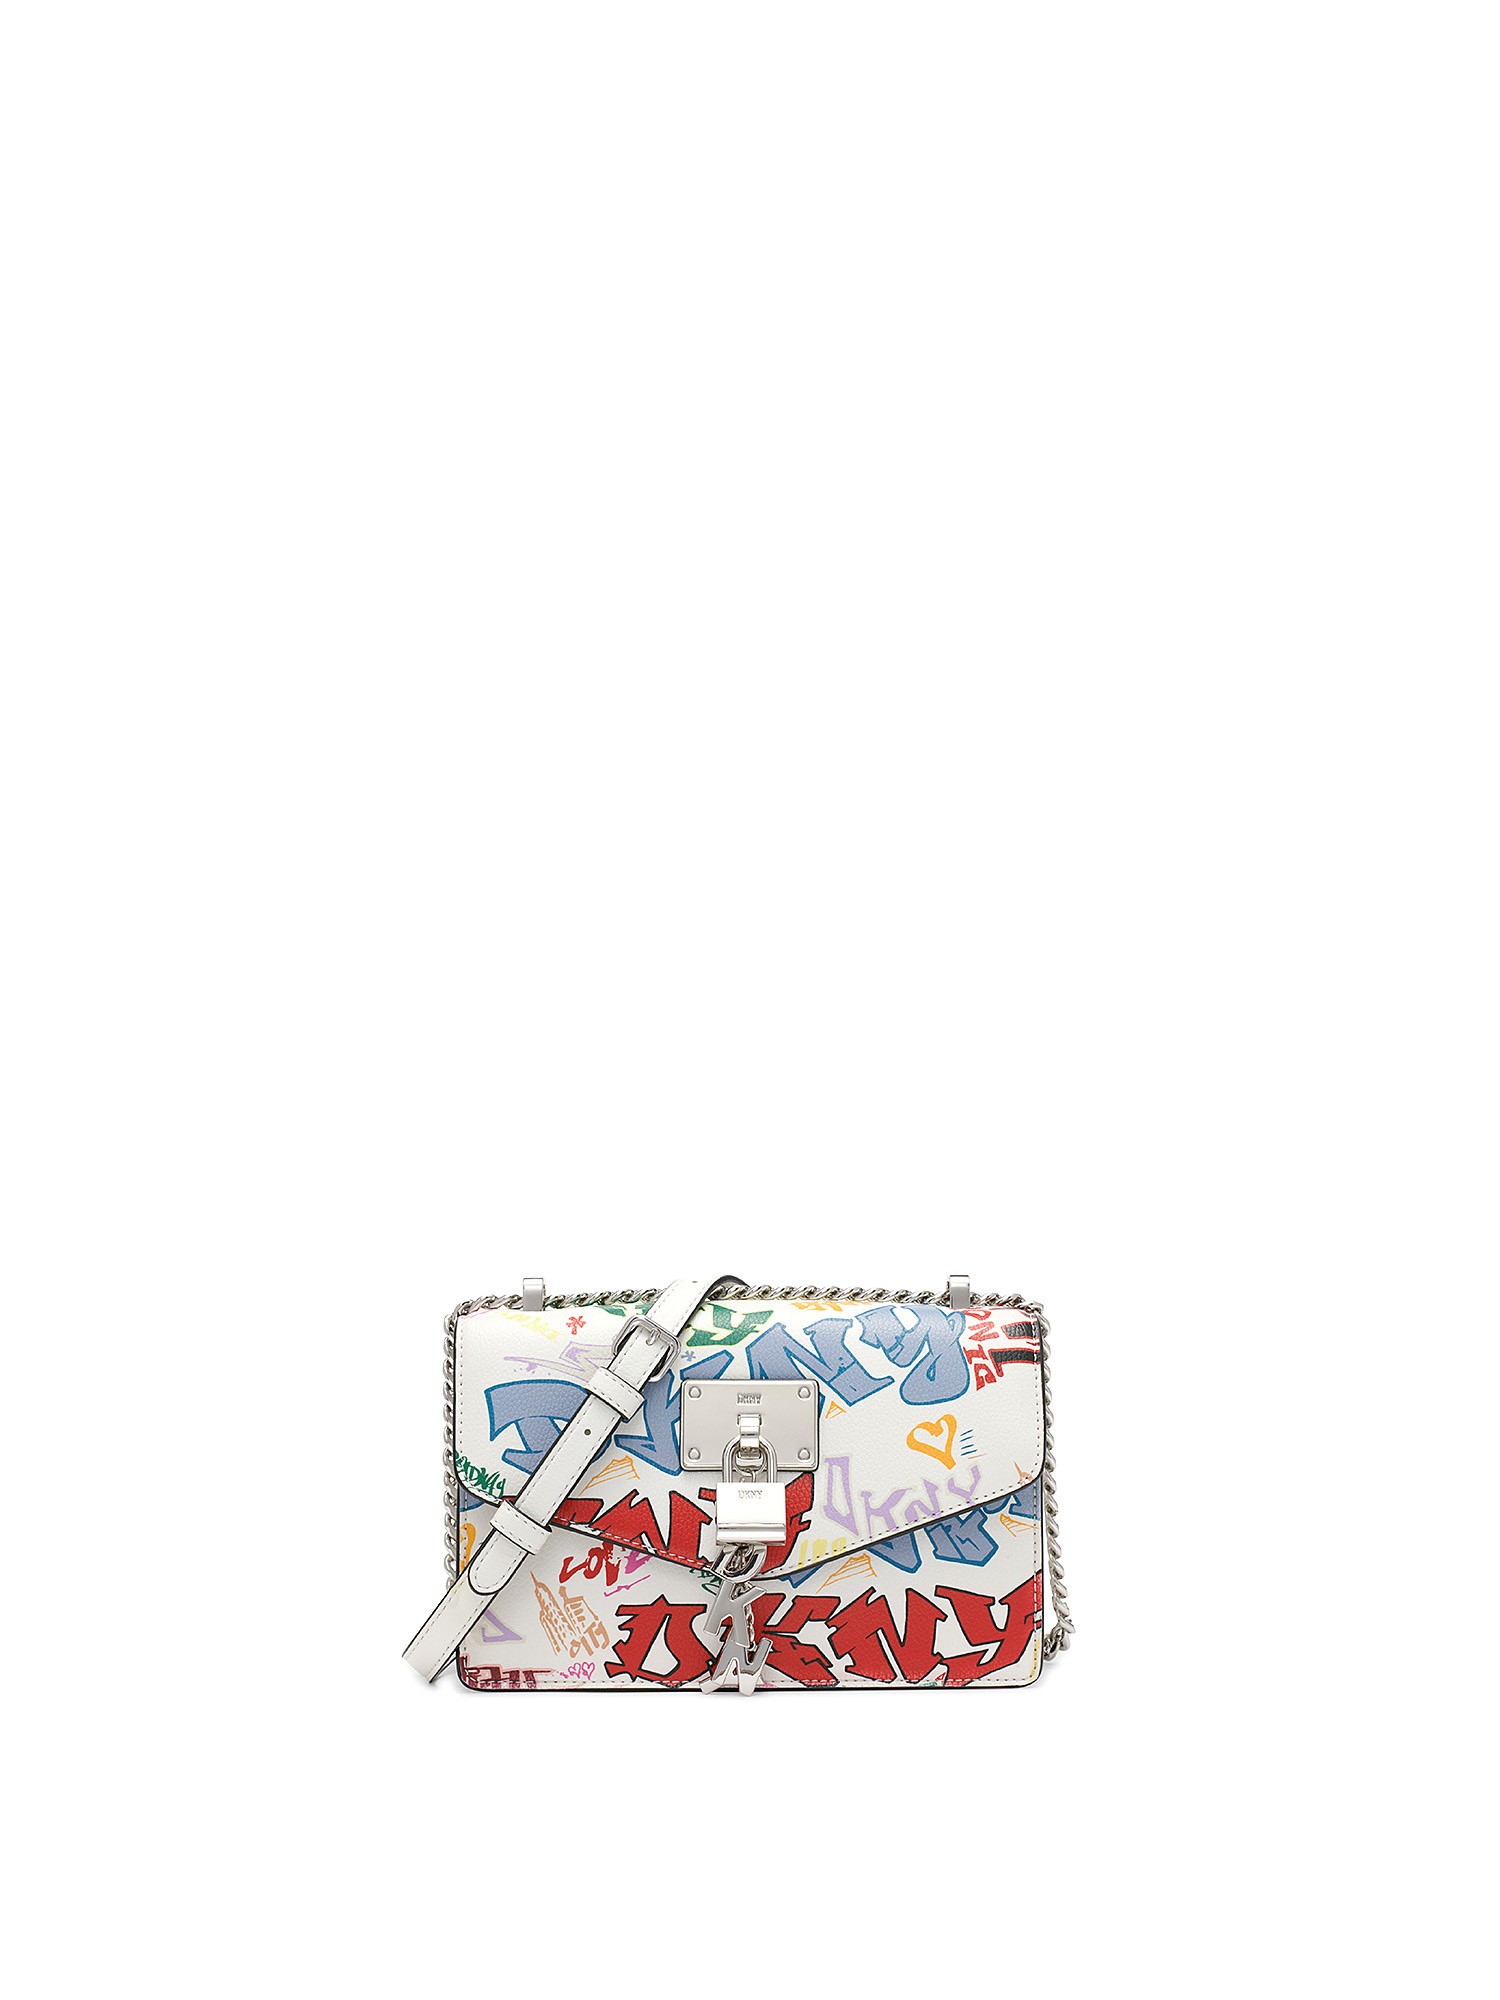 Dkny - Elissa shoulder bag with graffiti print, White, large image number 0